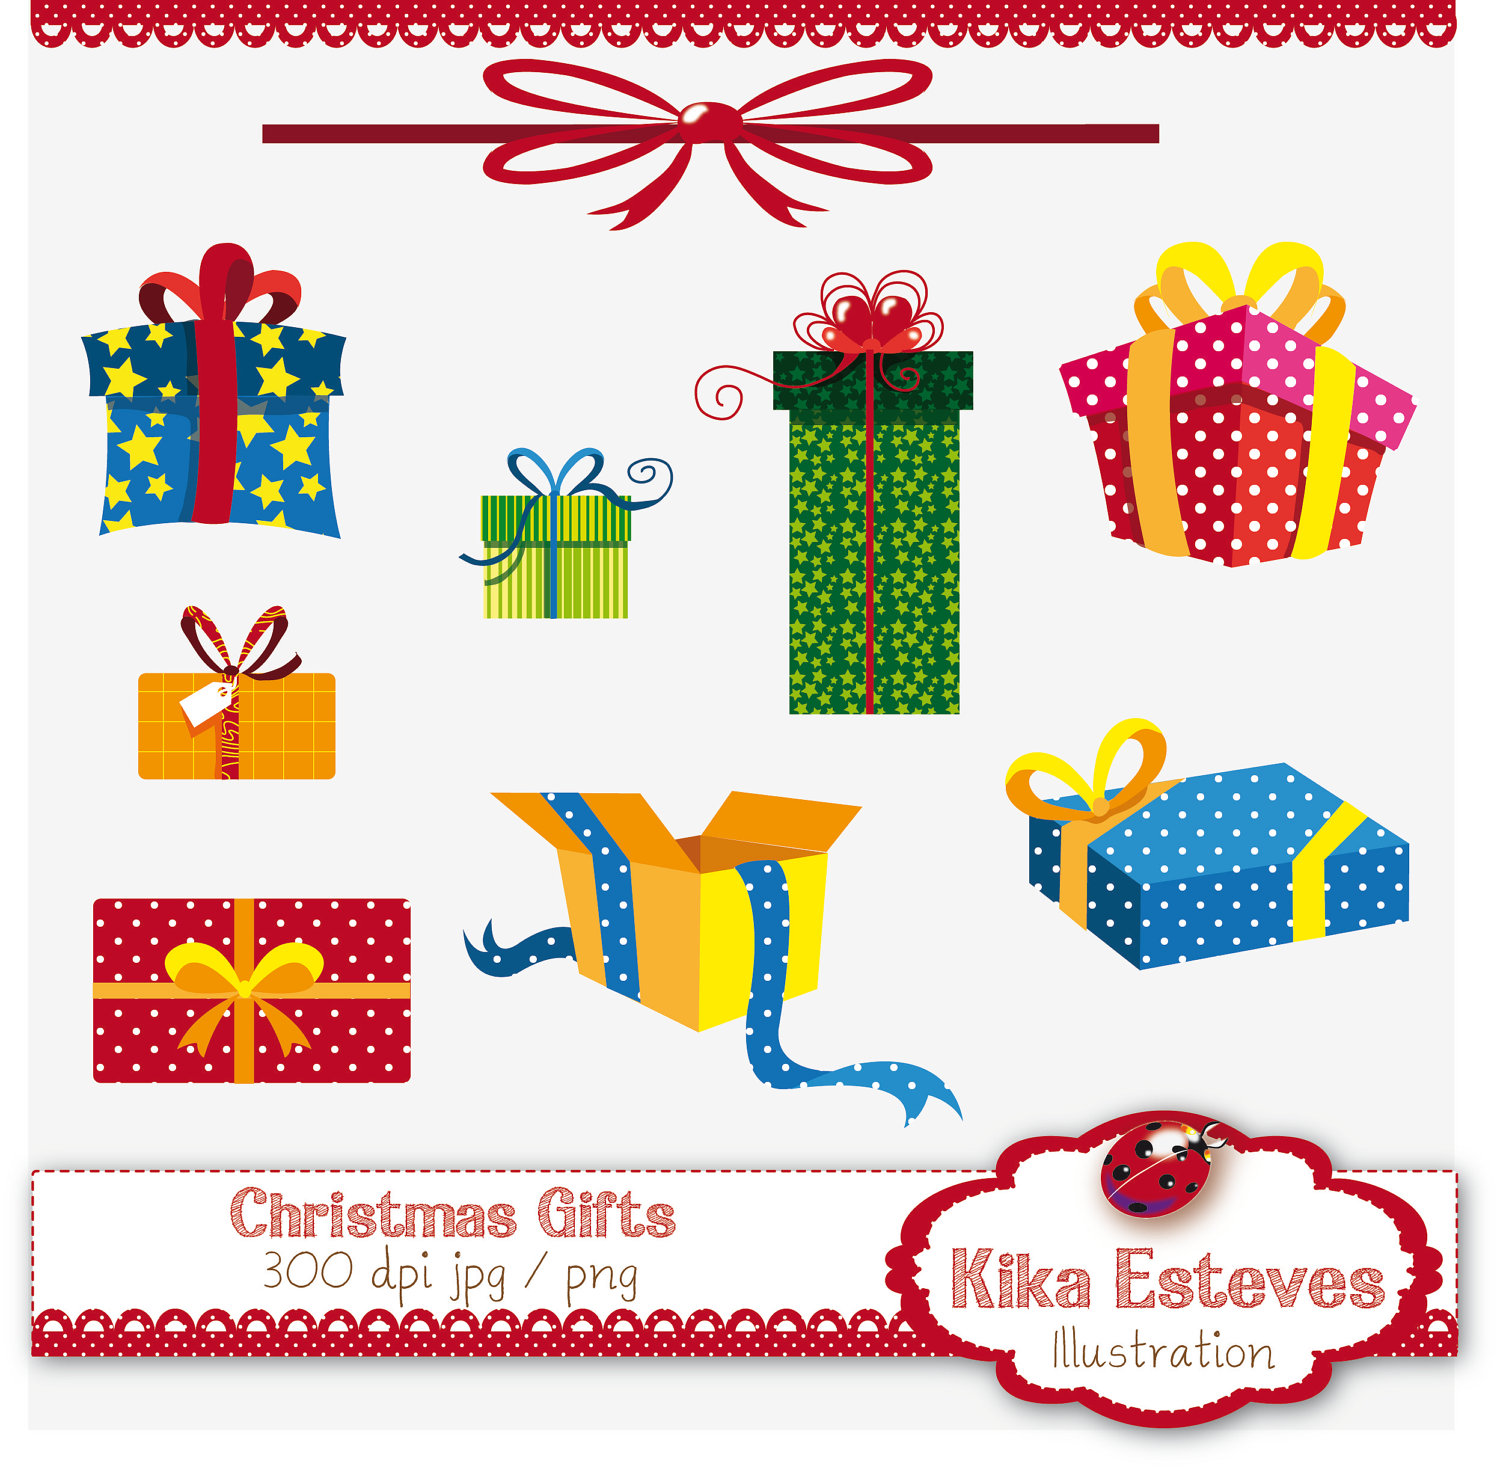 Gift Shop drawing free image download